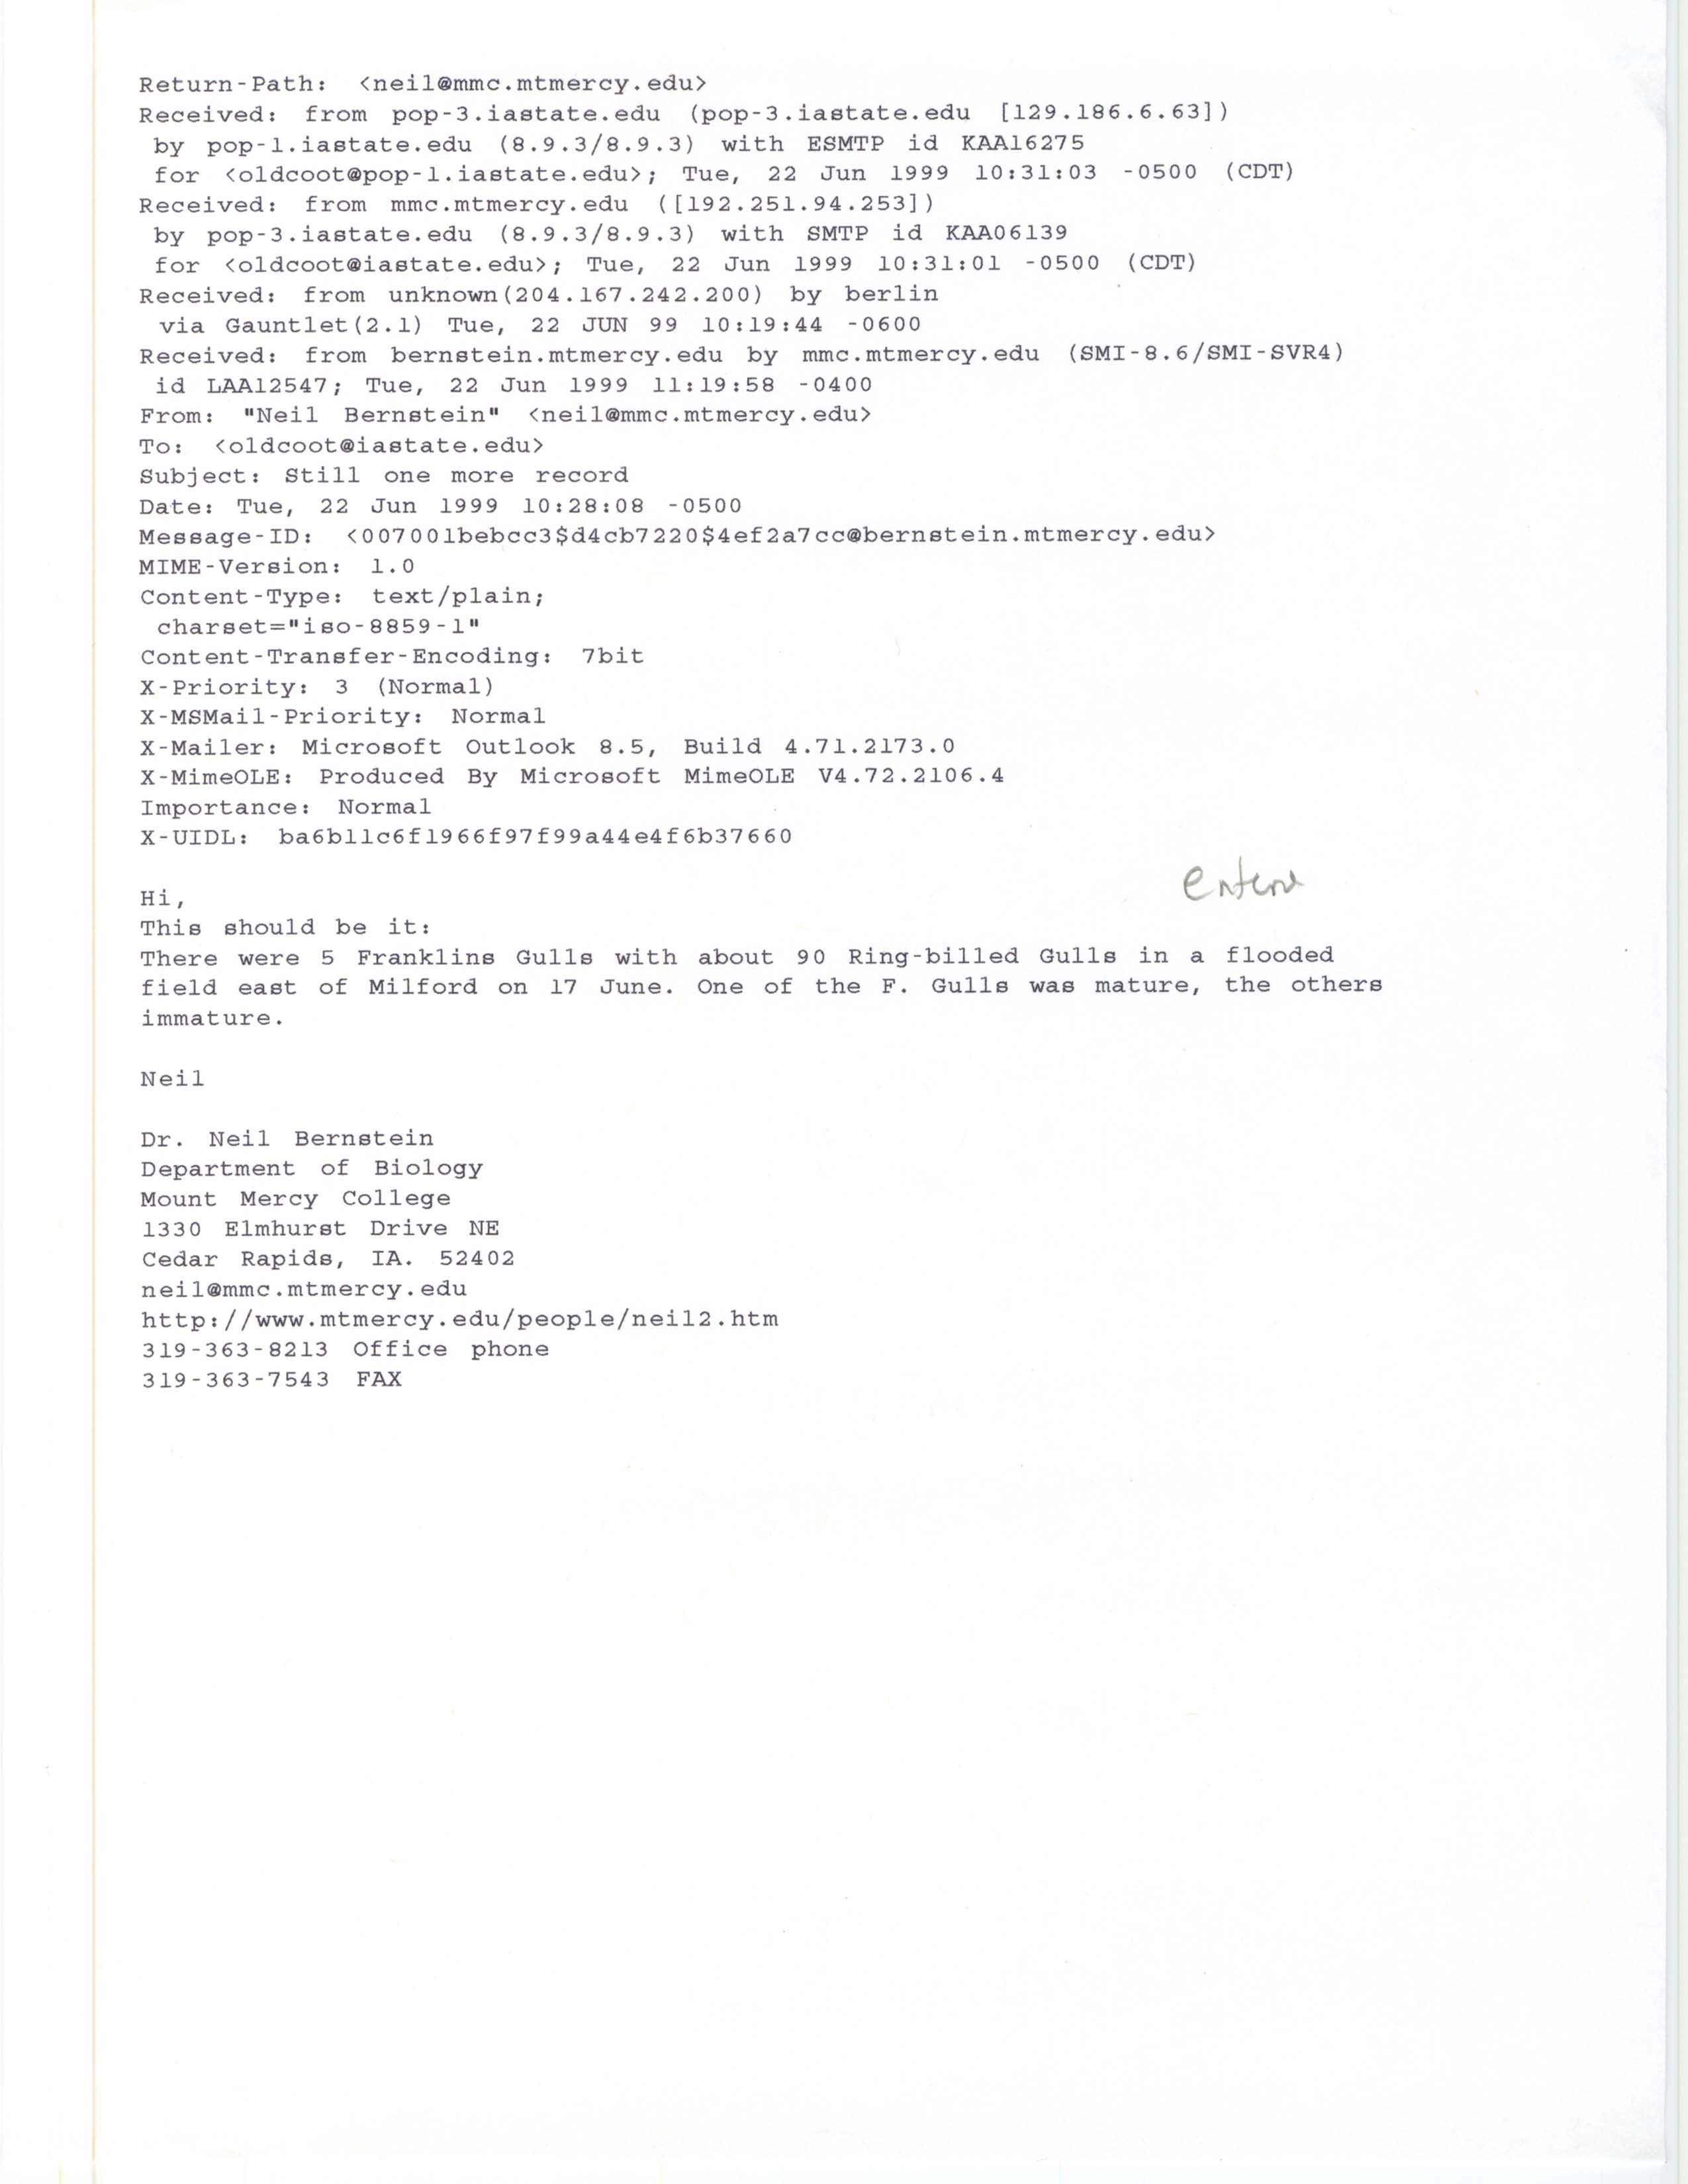 Neil Bernstein email to Jim Dinsmore regarding Franklin's Gulls, June 22, 1999